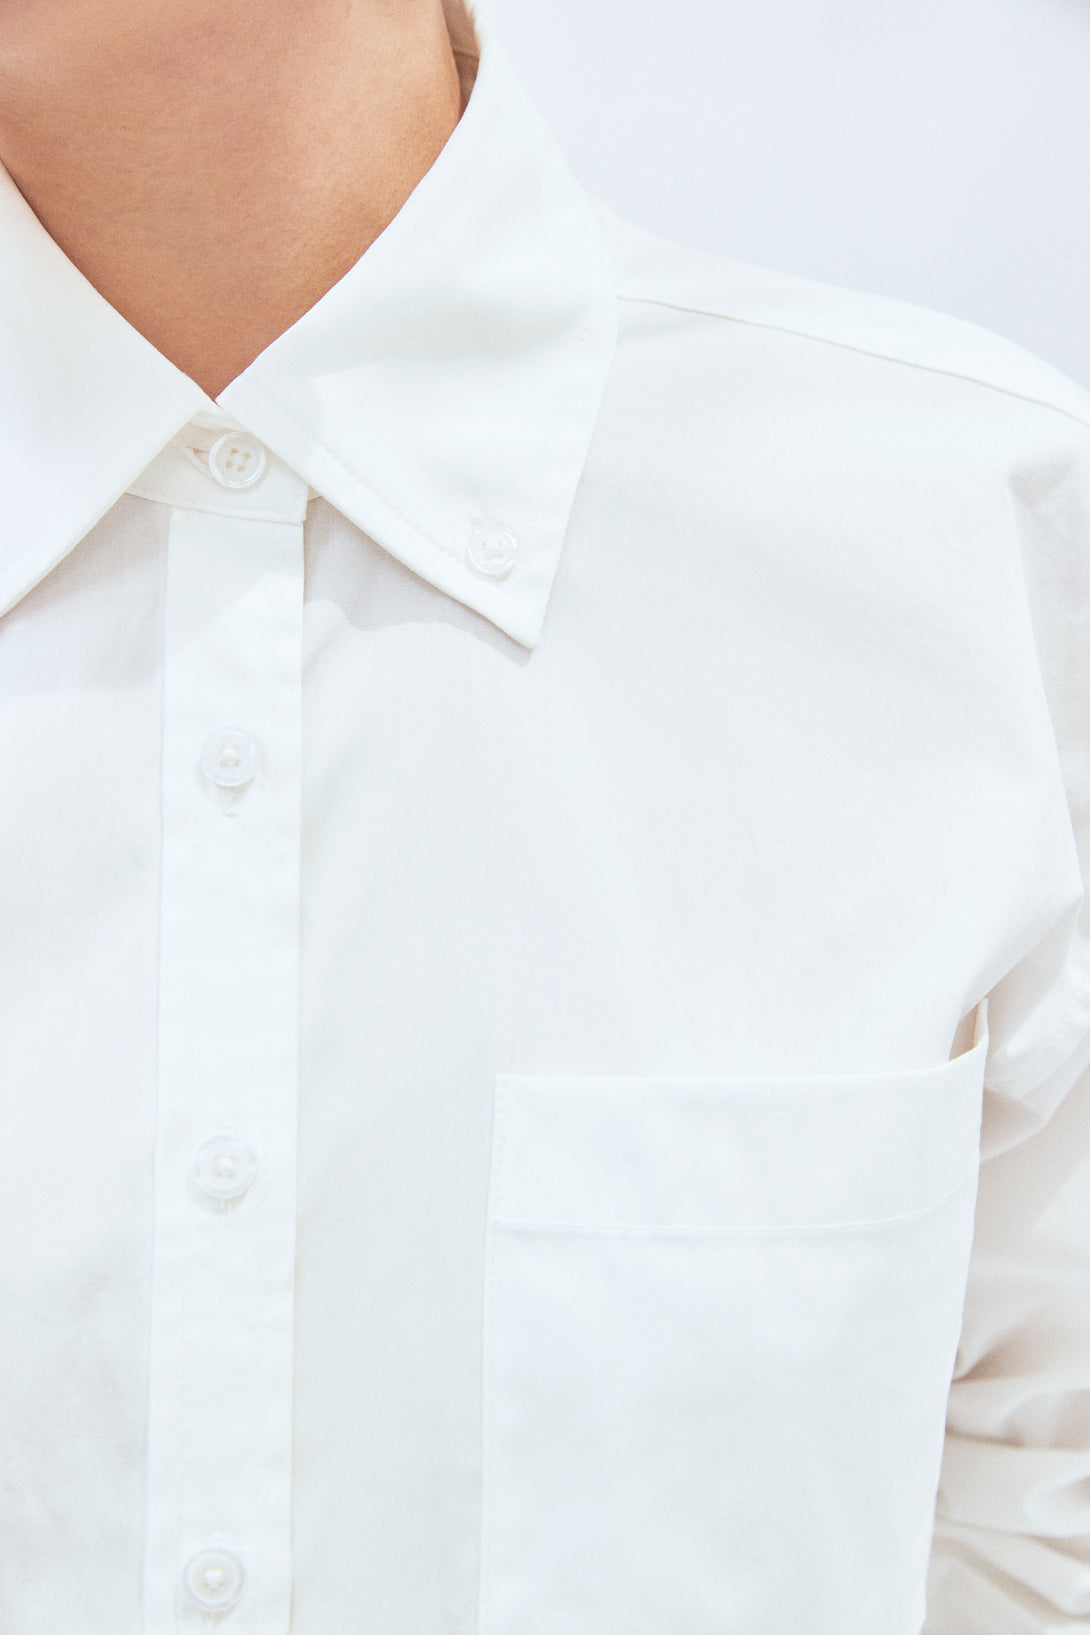 Cropped White Button-Down Shirt